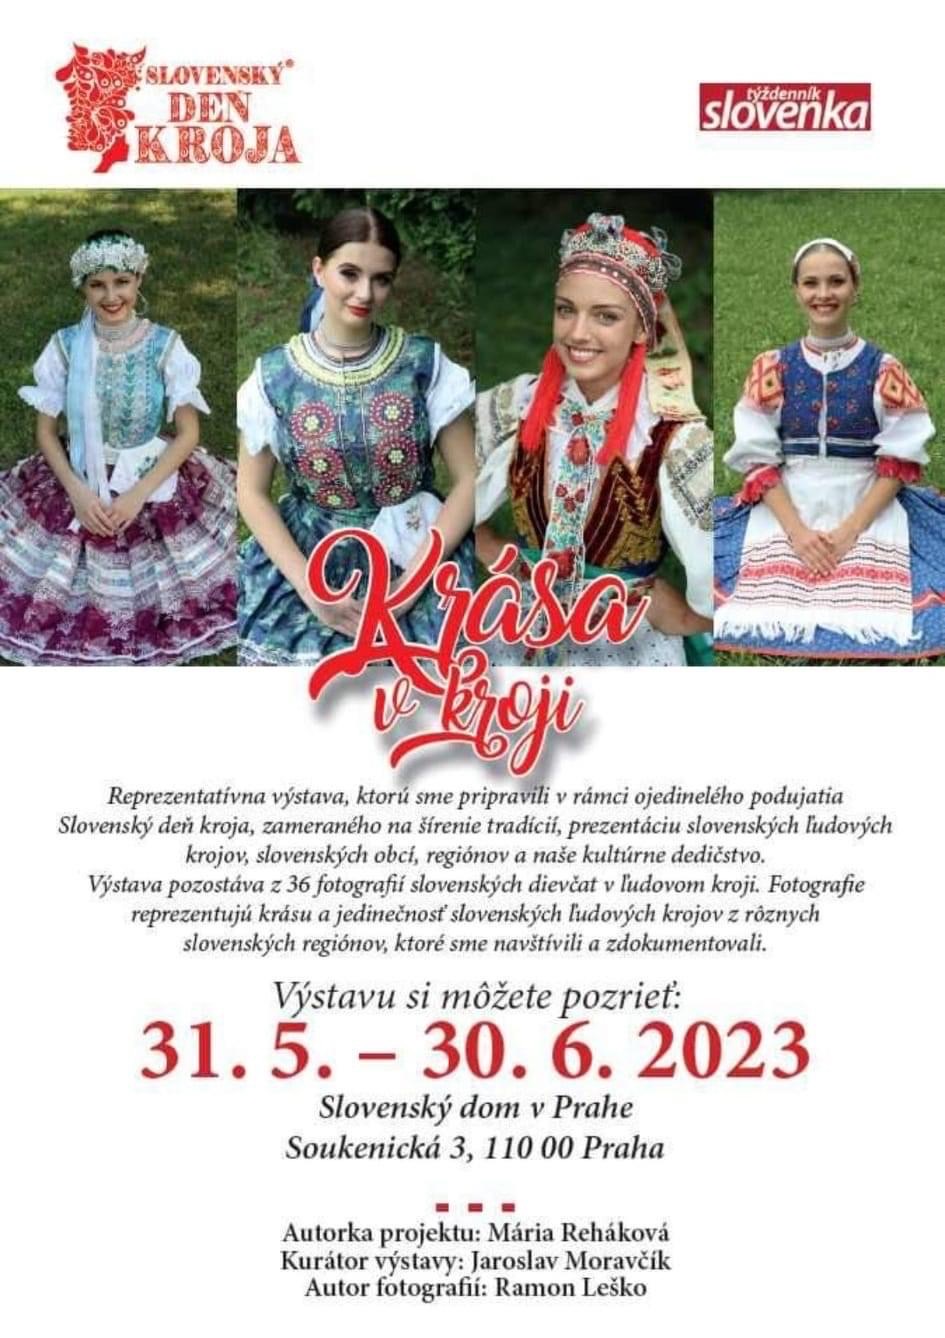 Slovensk de kroja 2023 Praha - Krsa v kroji